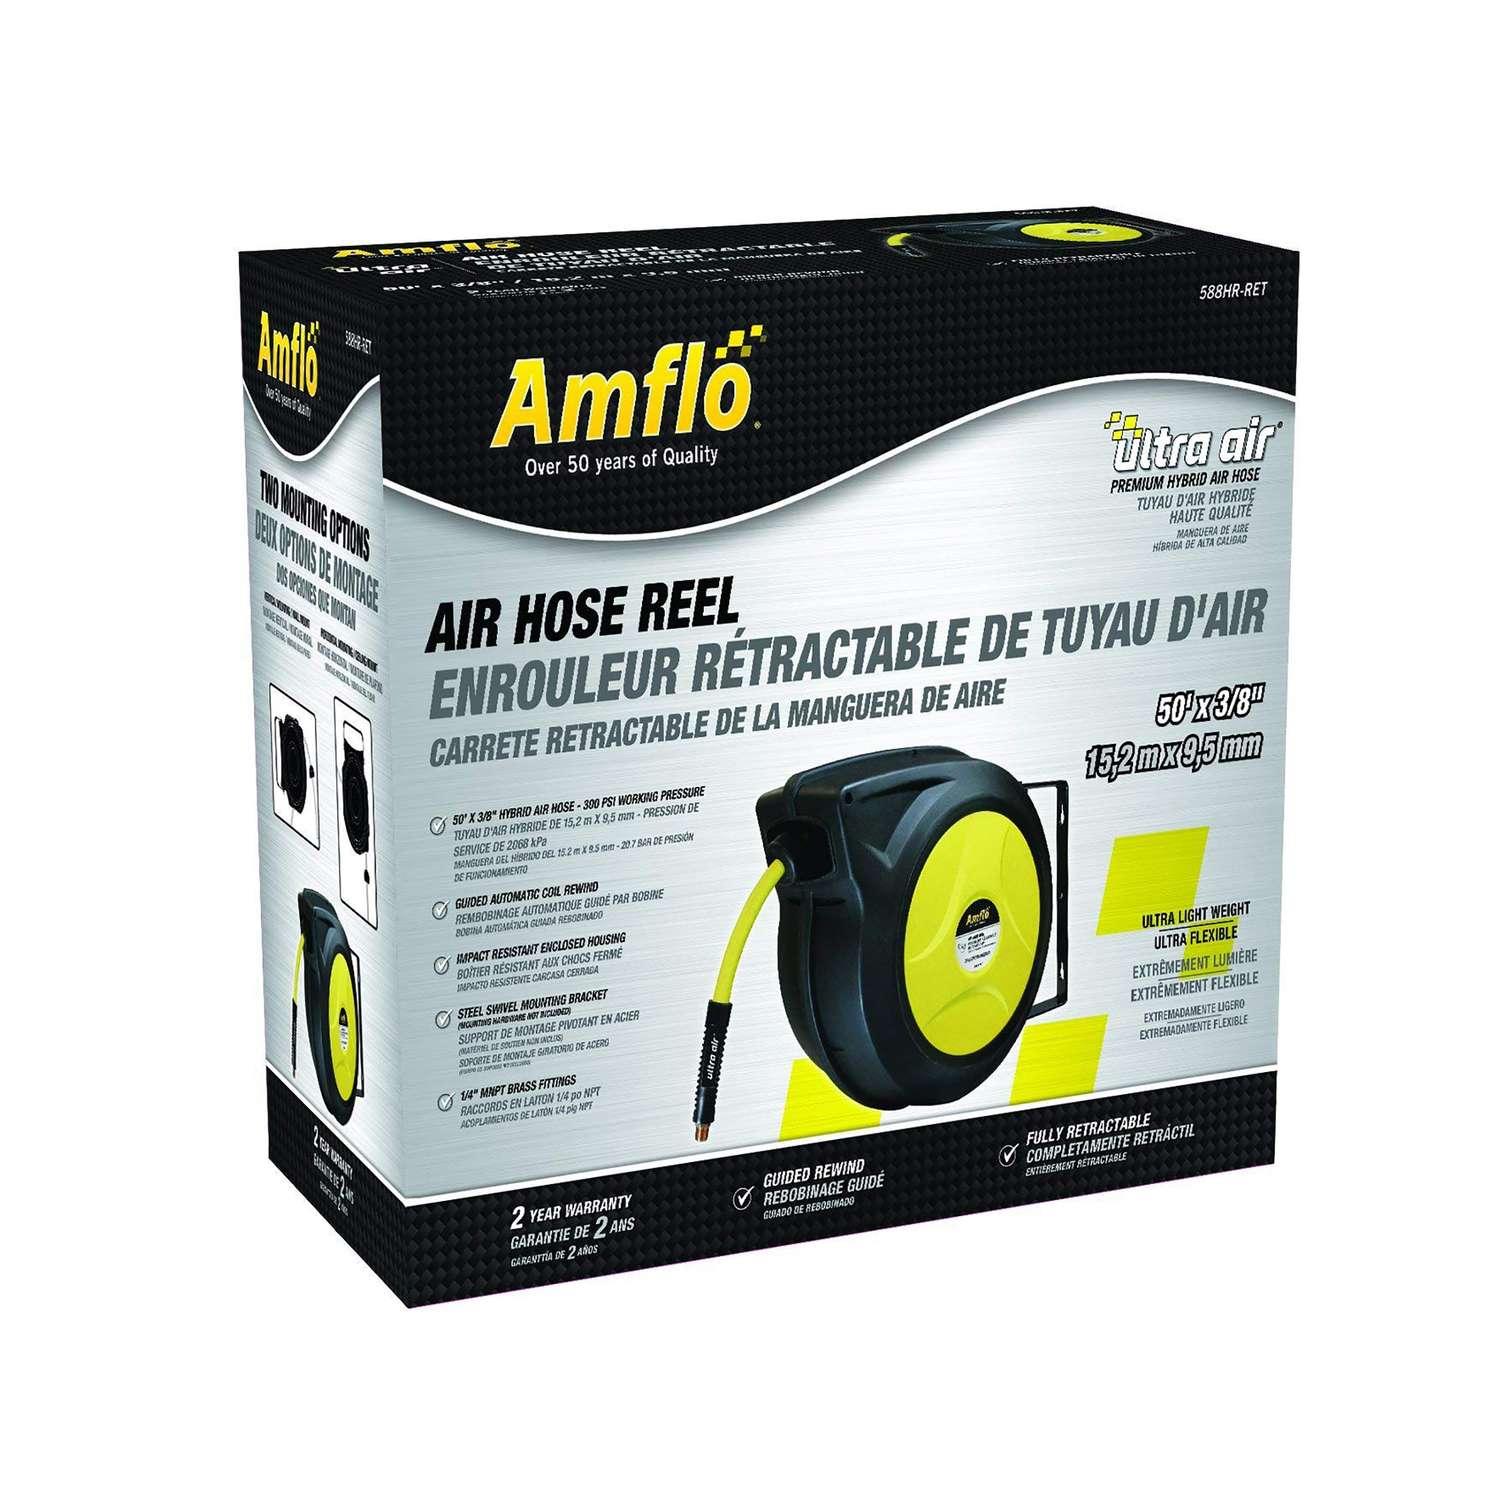 Amflo 588hr-ret Hybrid Hose Reel